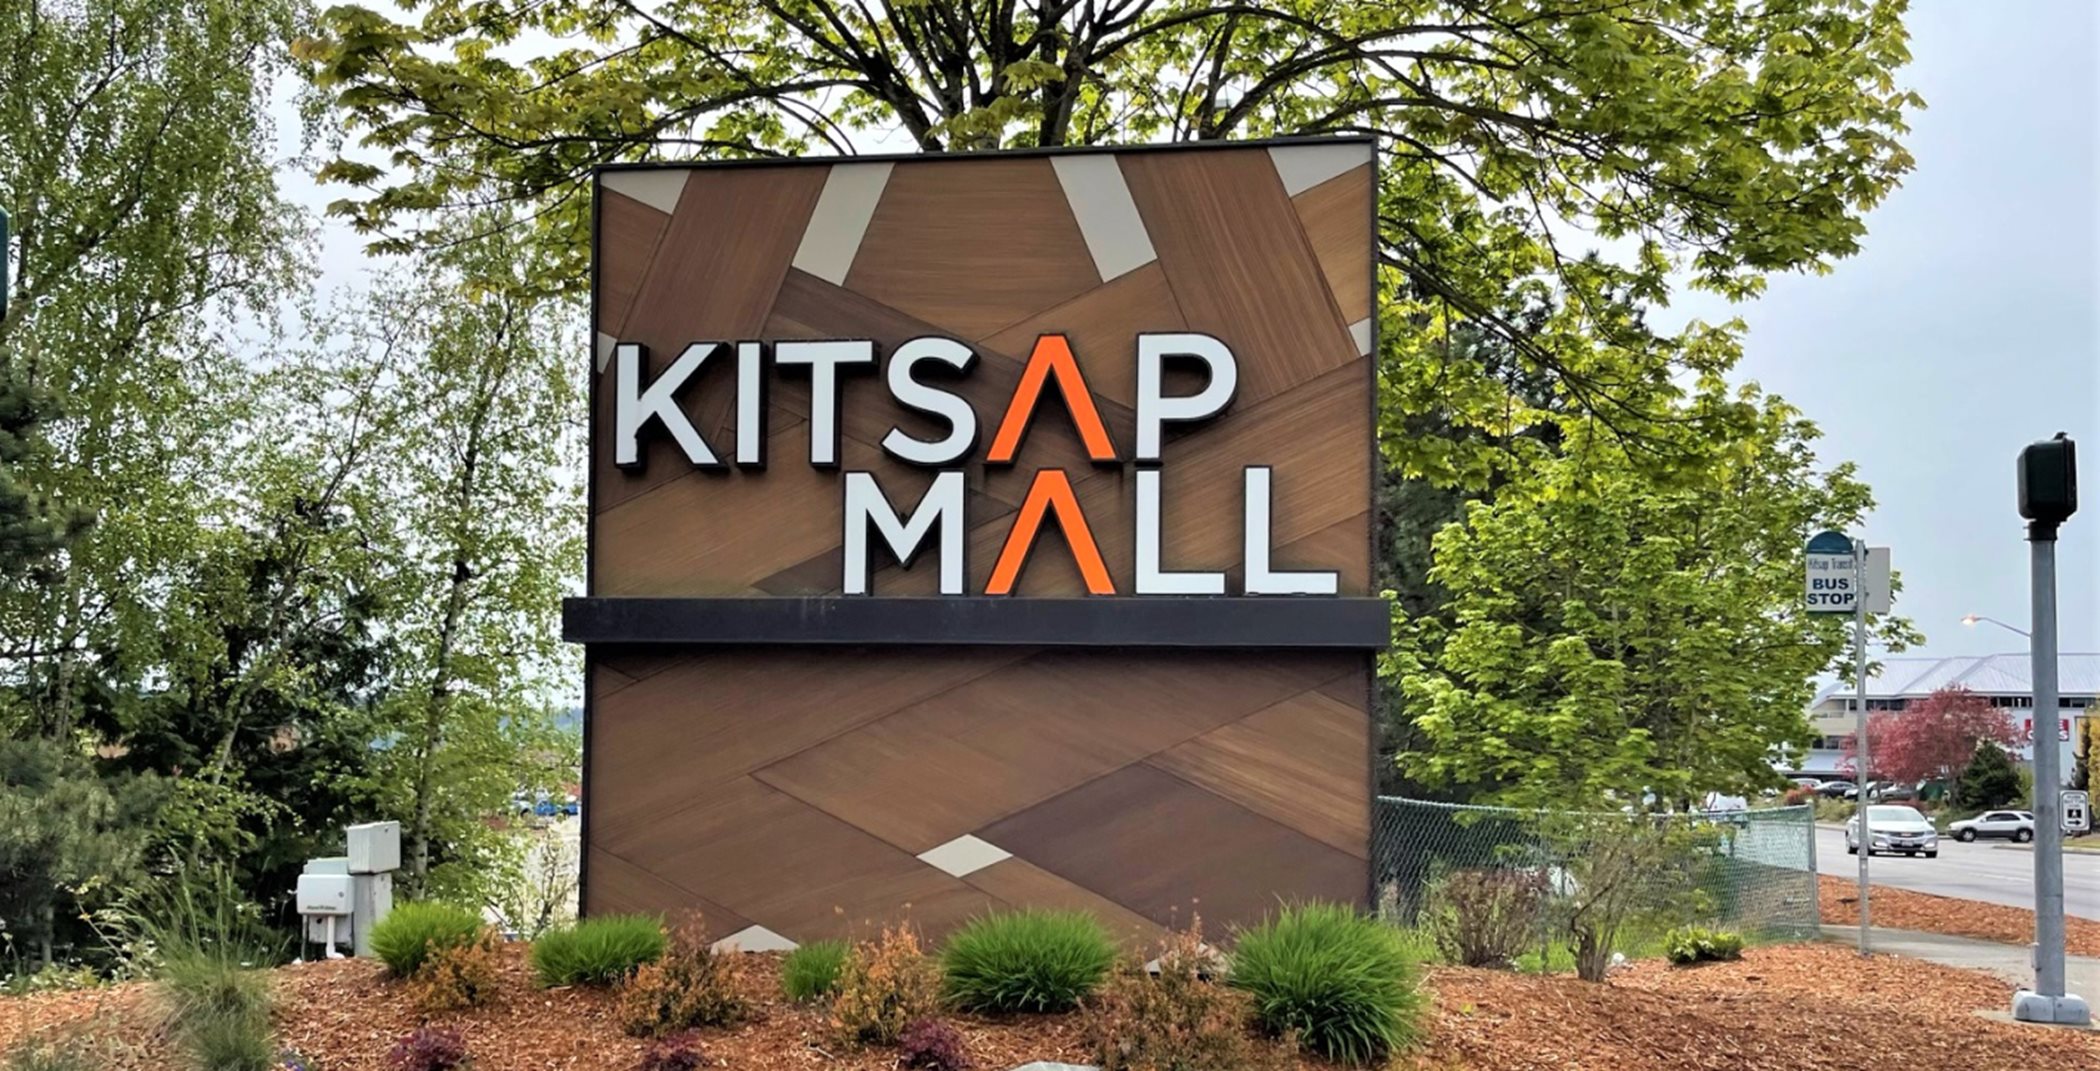 Kitsapp Mall sign